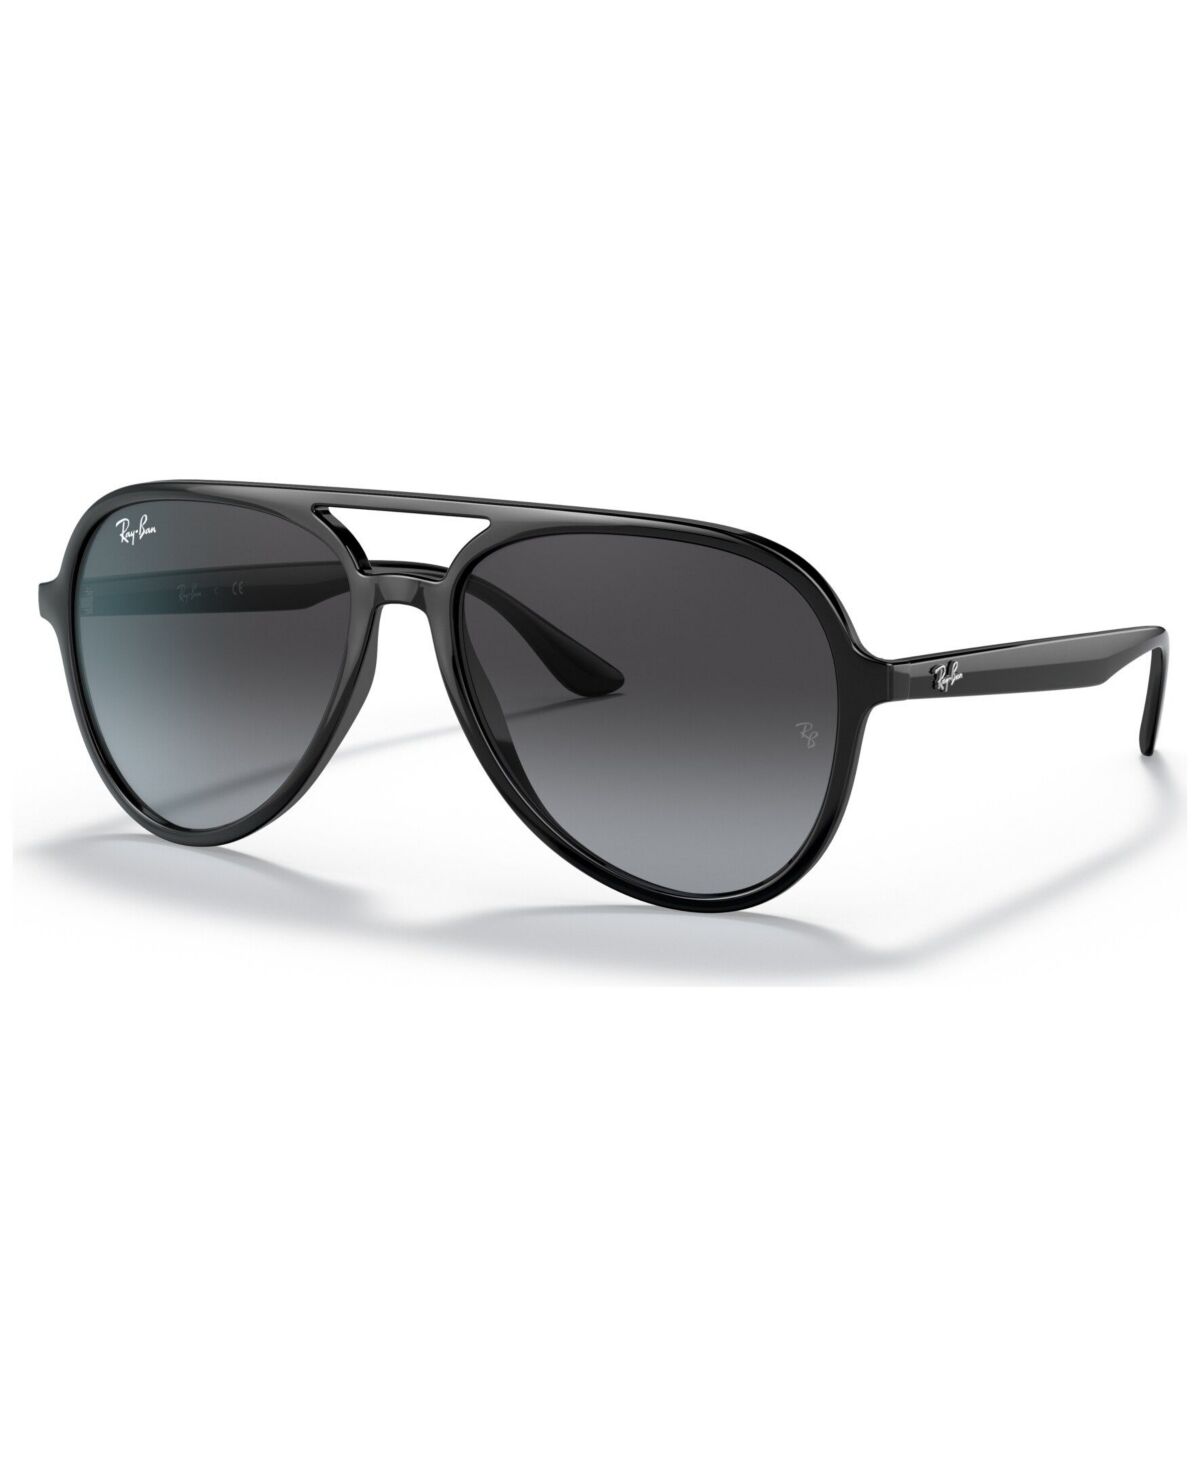 Ray-Ban Unisex Sunglasses, RB4376 - Black